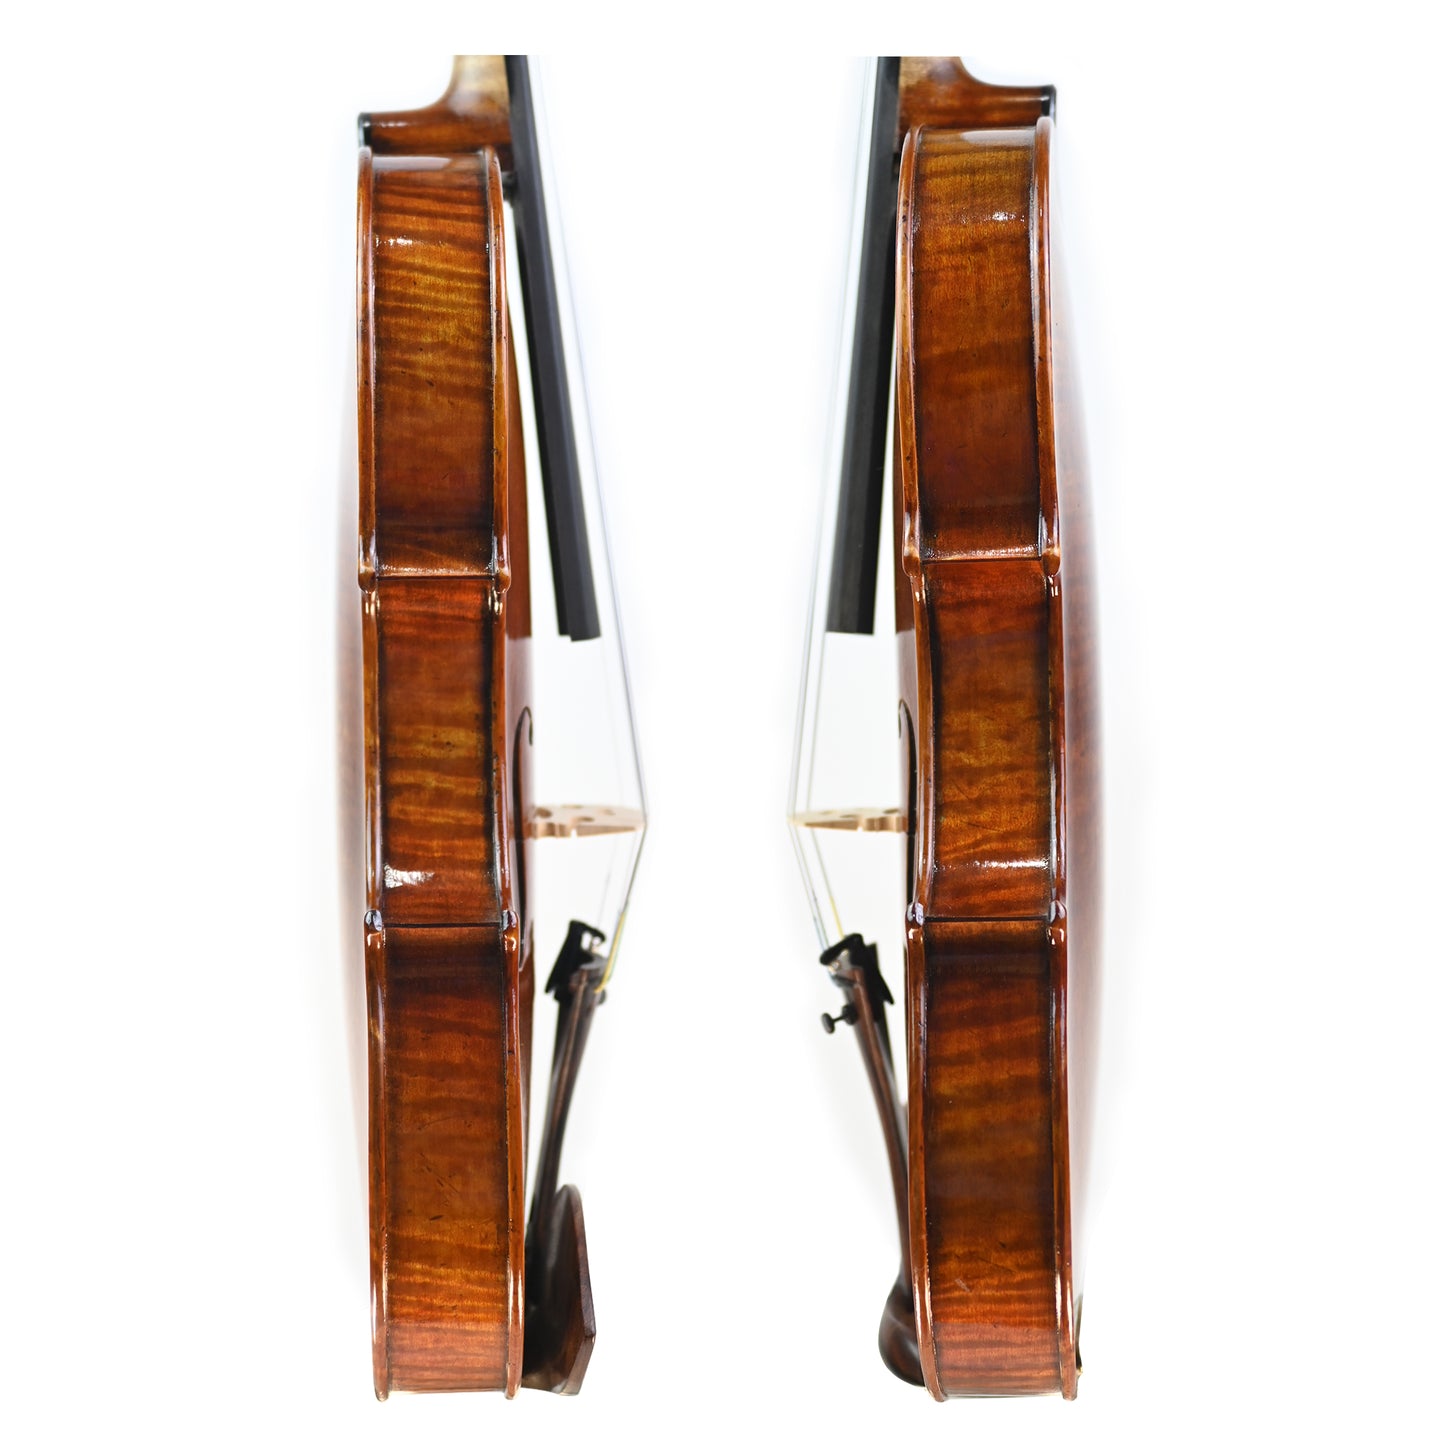 7002 antique violin ribs